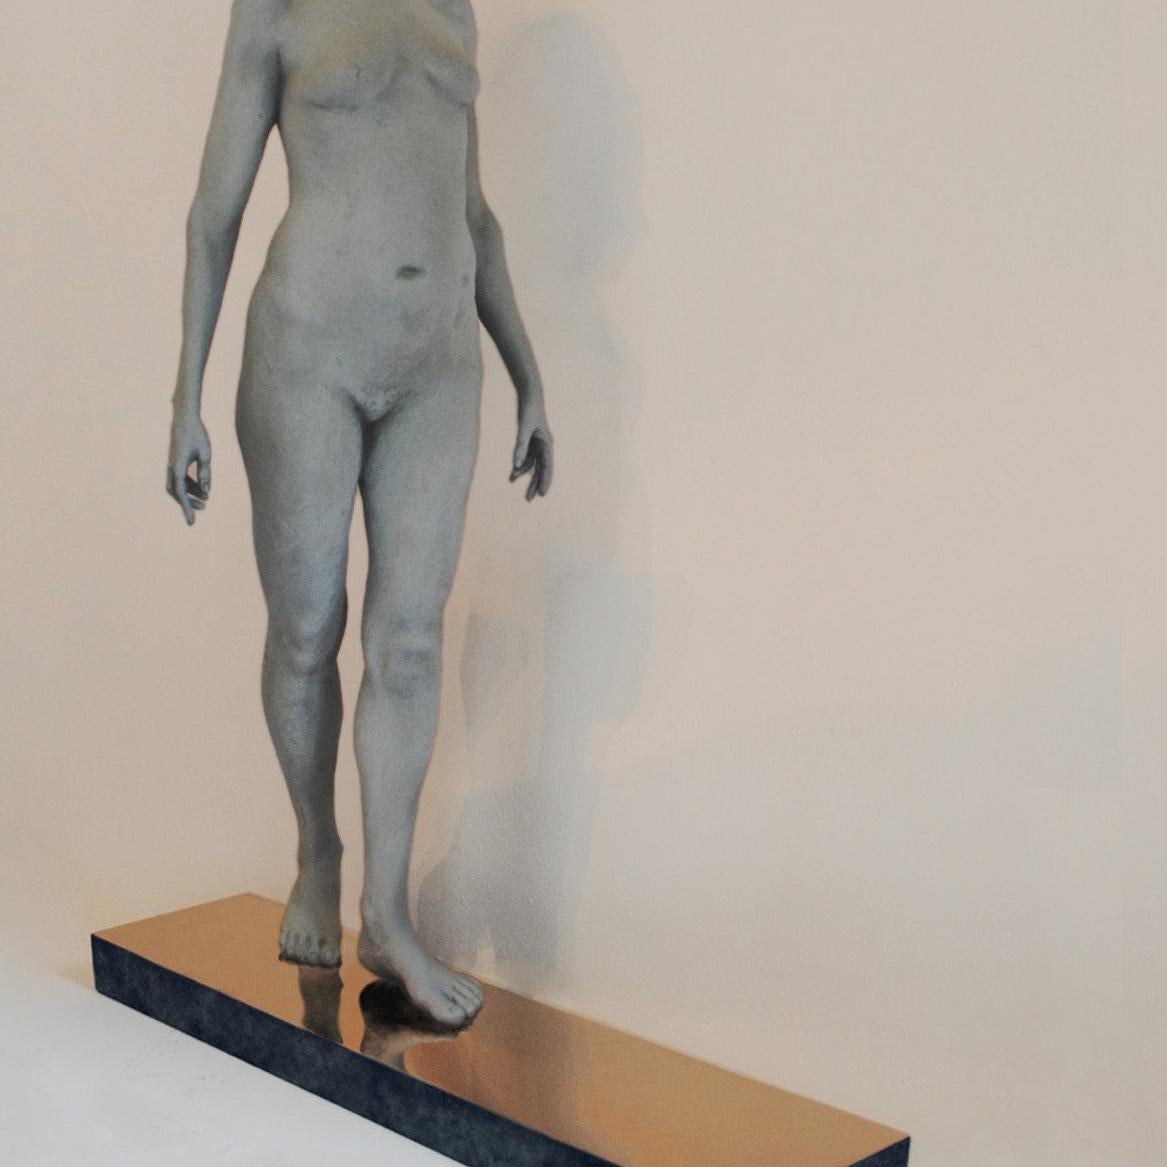 SHE'S WALKING, SCULPTURE STANDING ON PLATFORM, NUDE SCULPTURE, NUDE WOMAN  - Sculpture by Don Gale